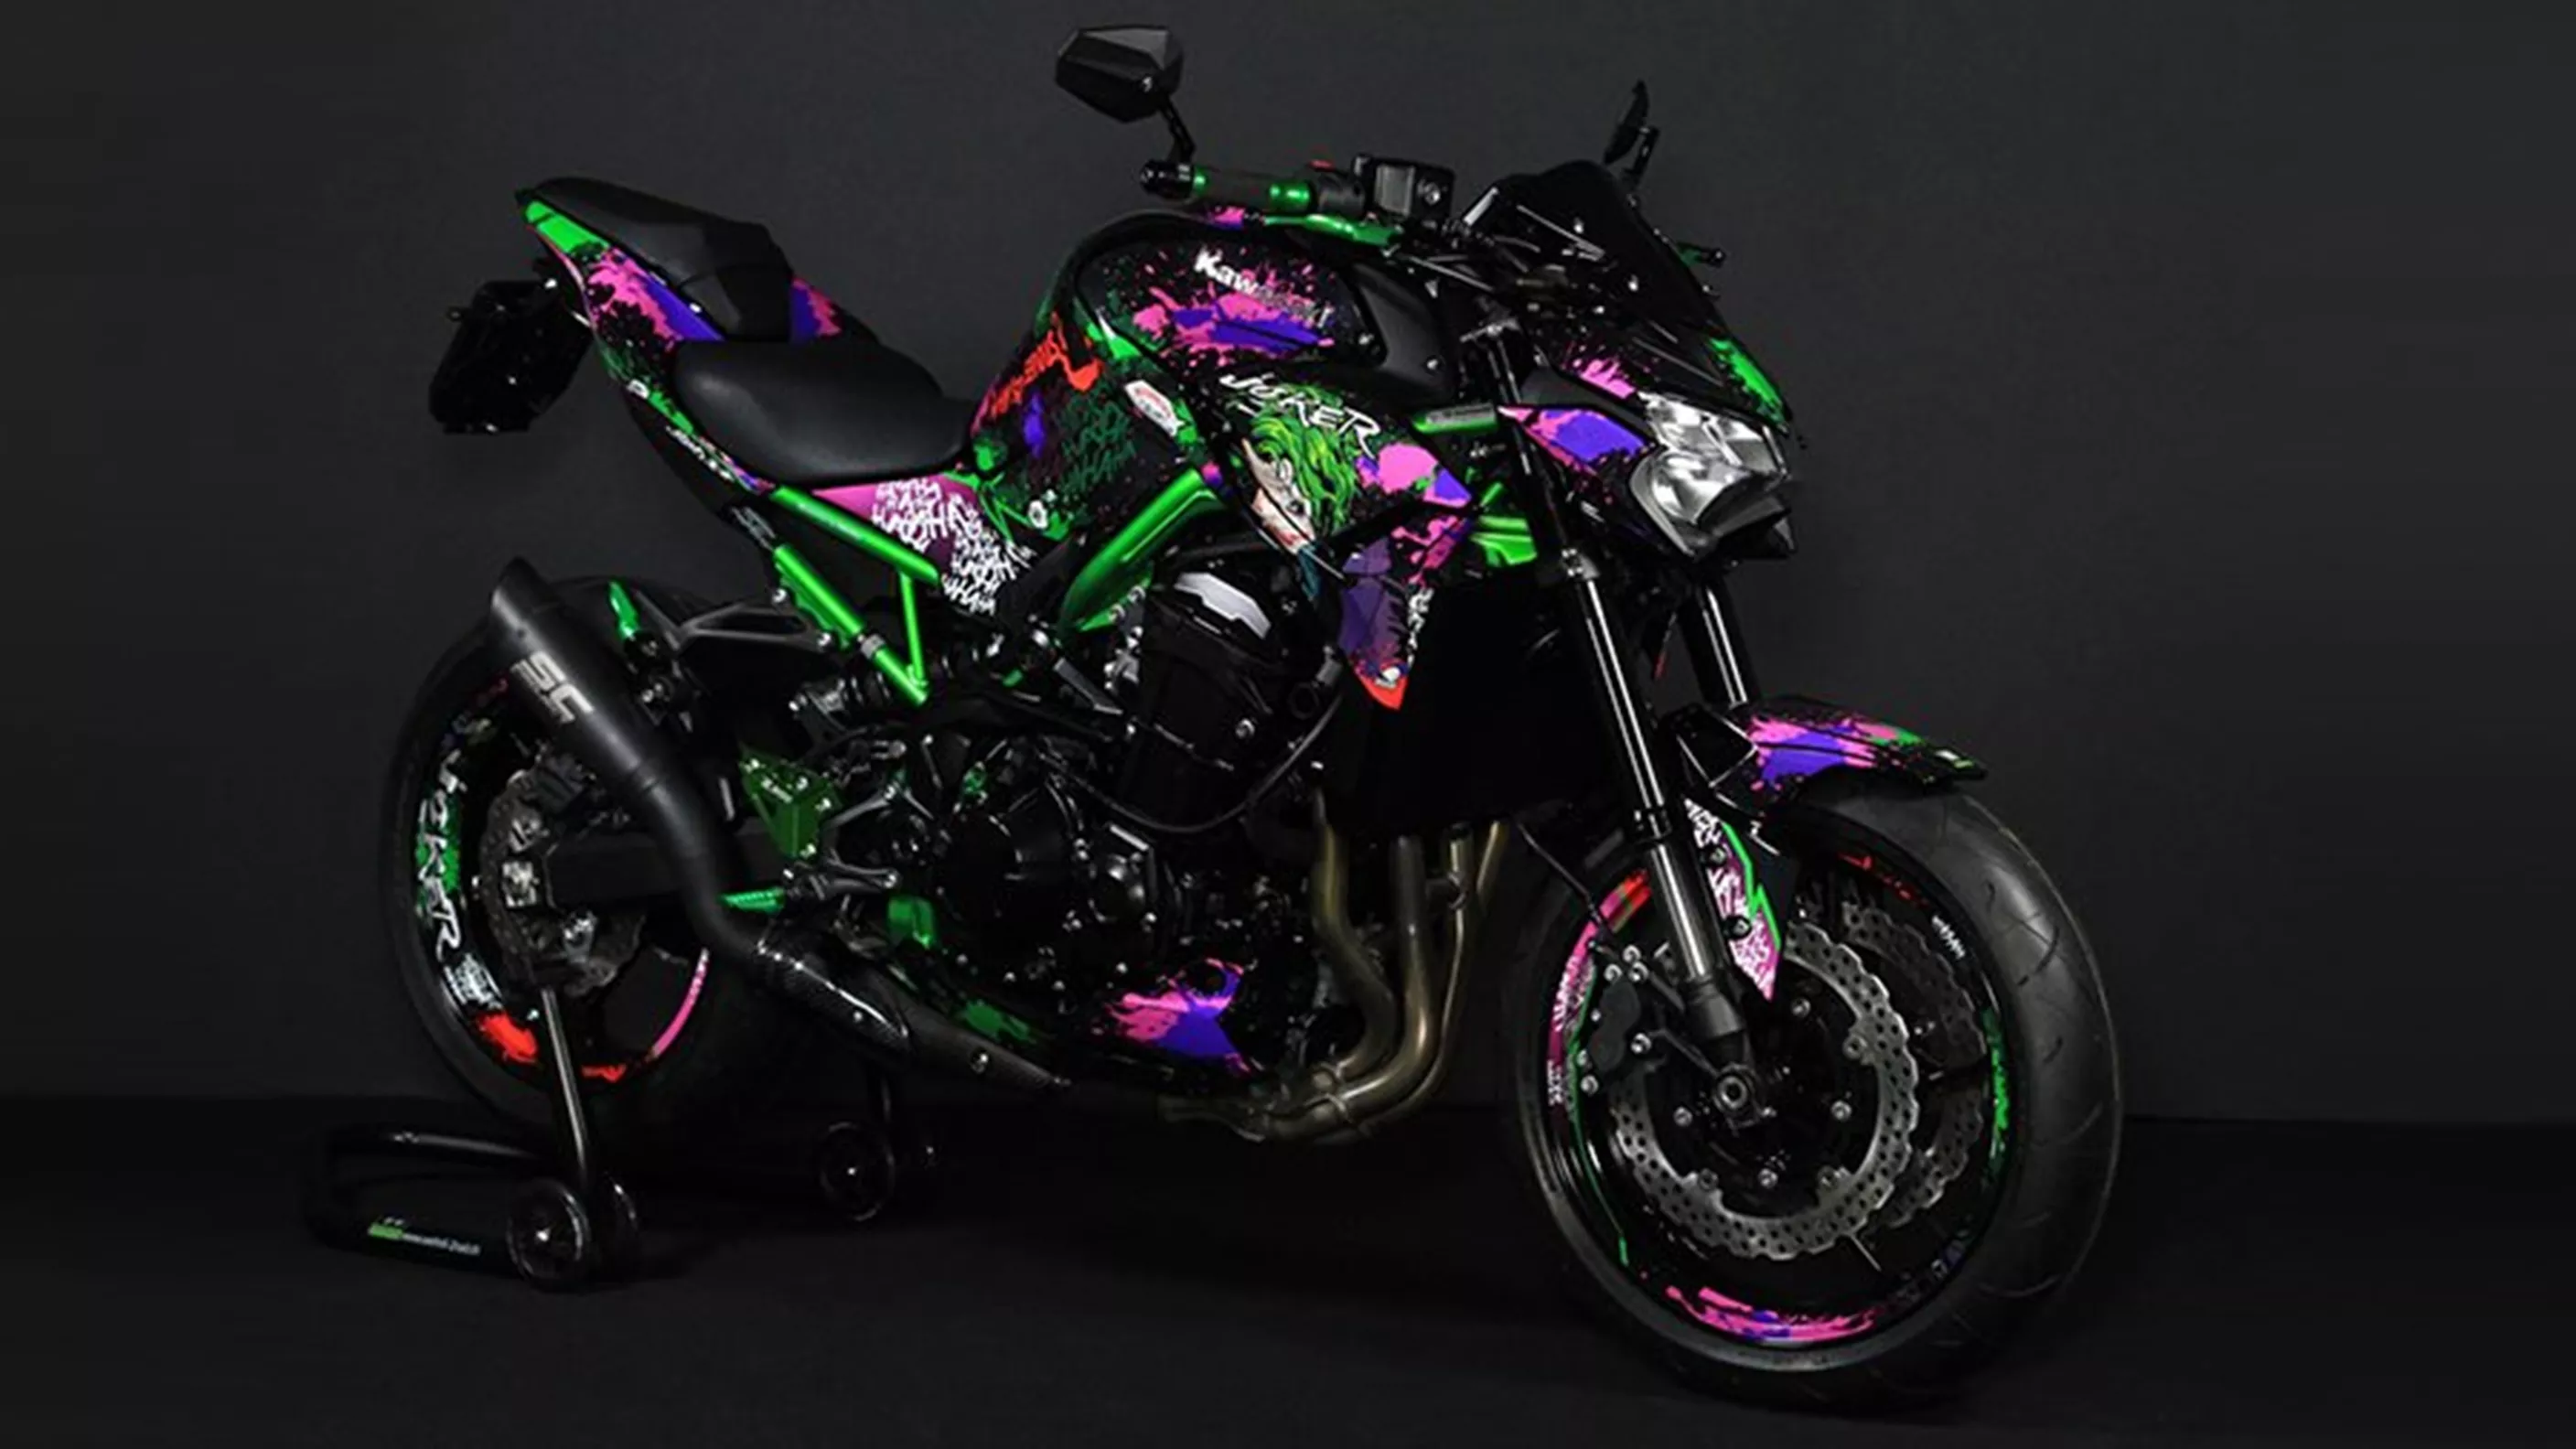 Motos personalizadas Kawasaki da Wehrli Design num fato de super-herói!